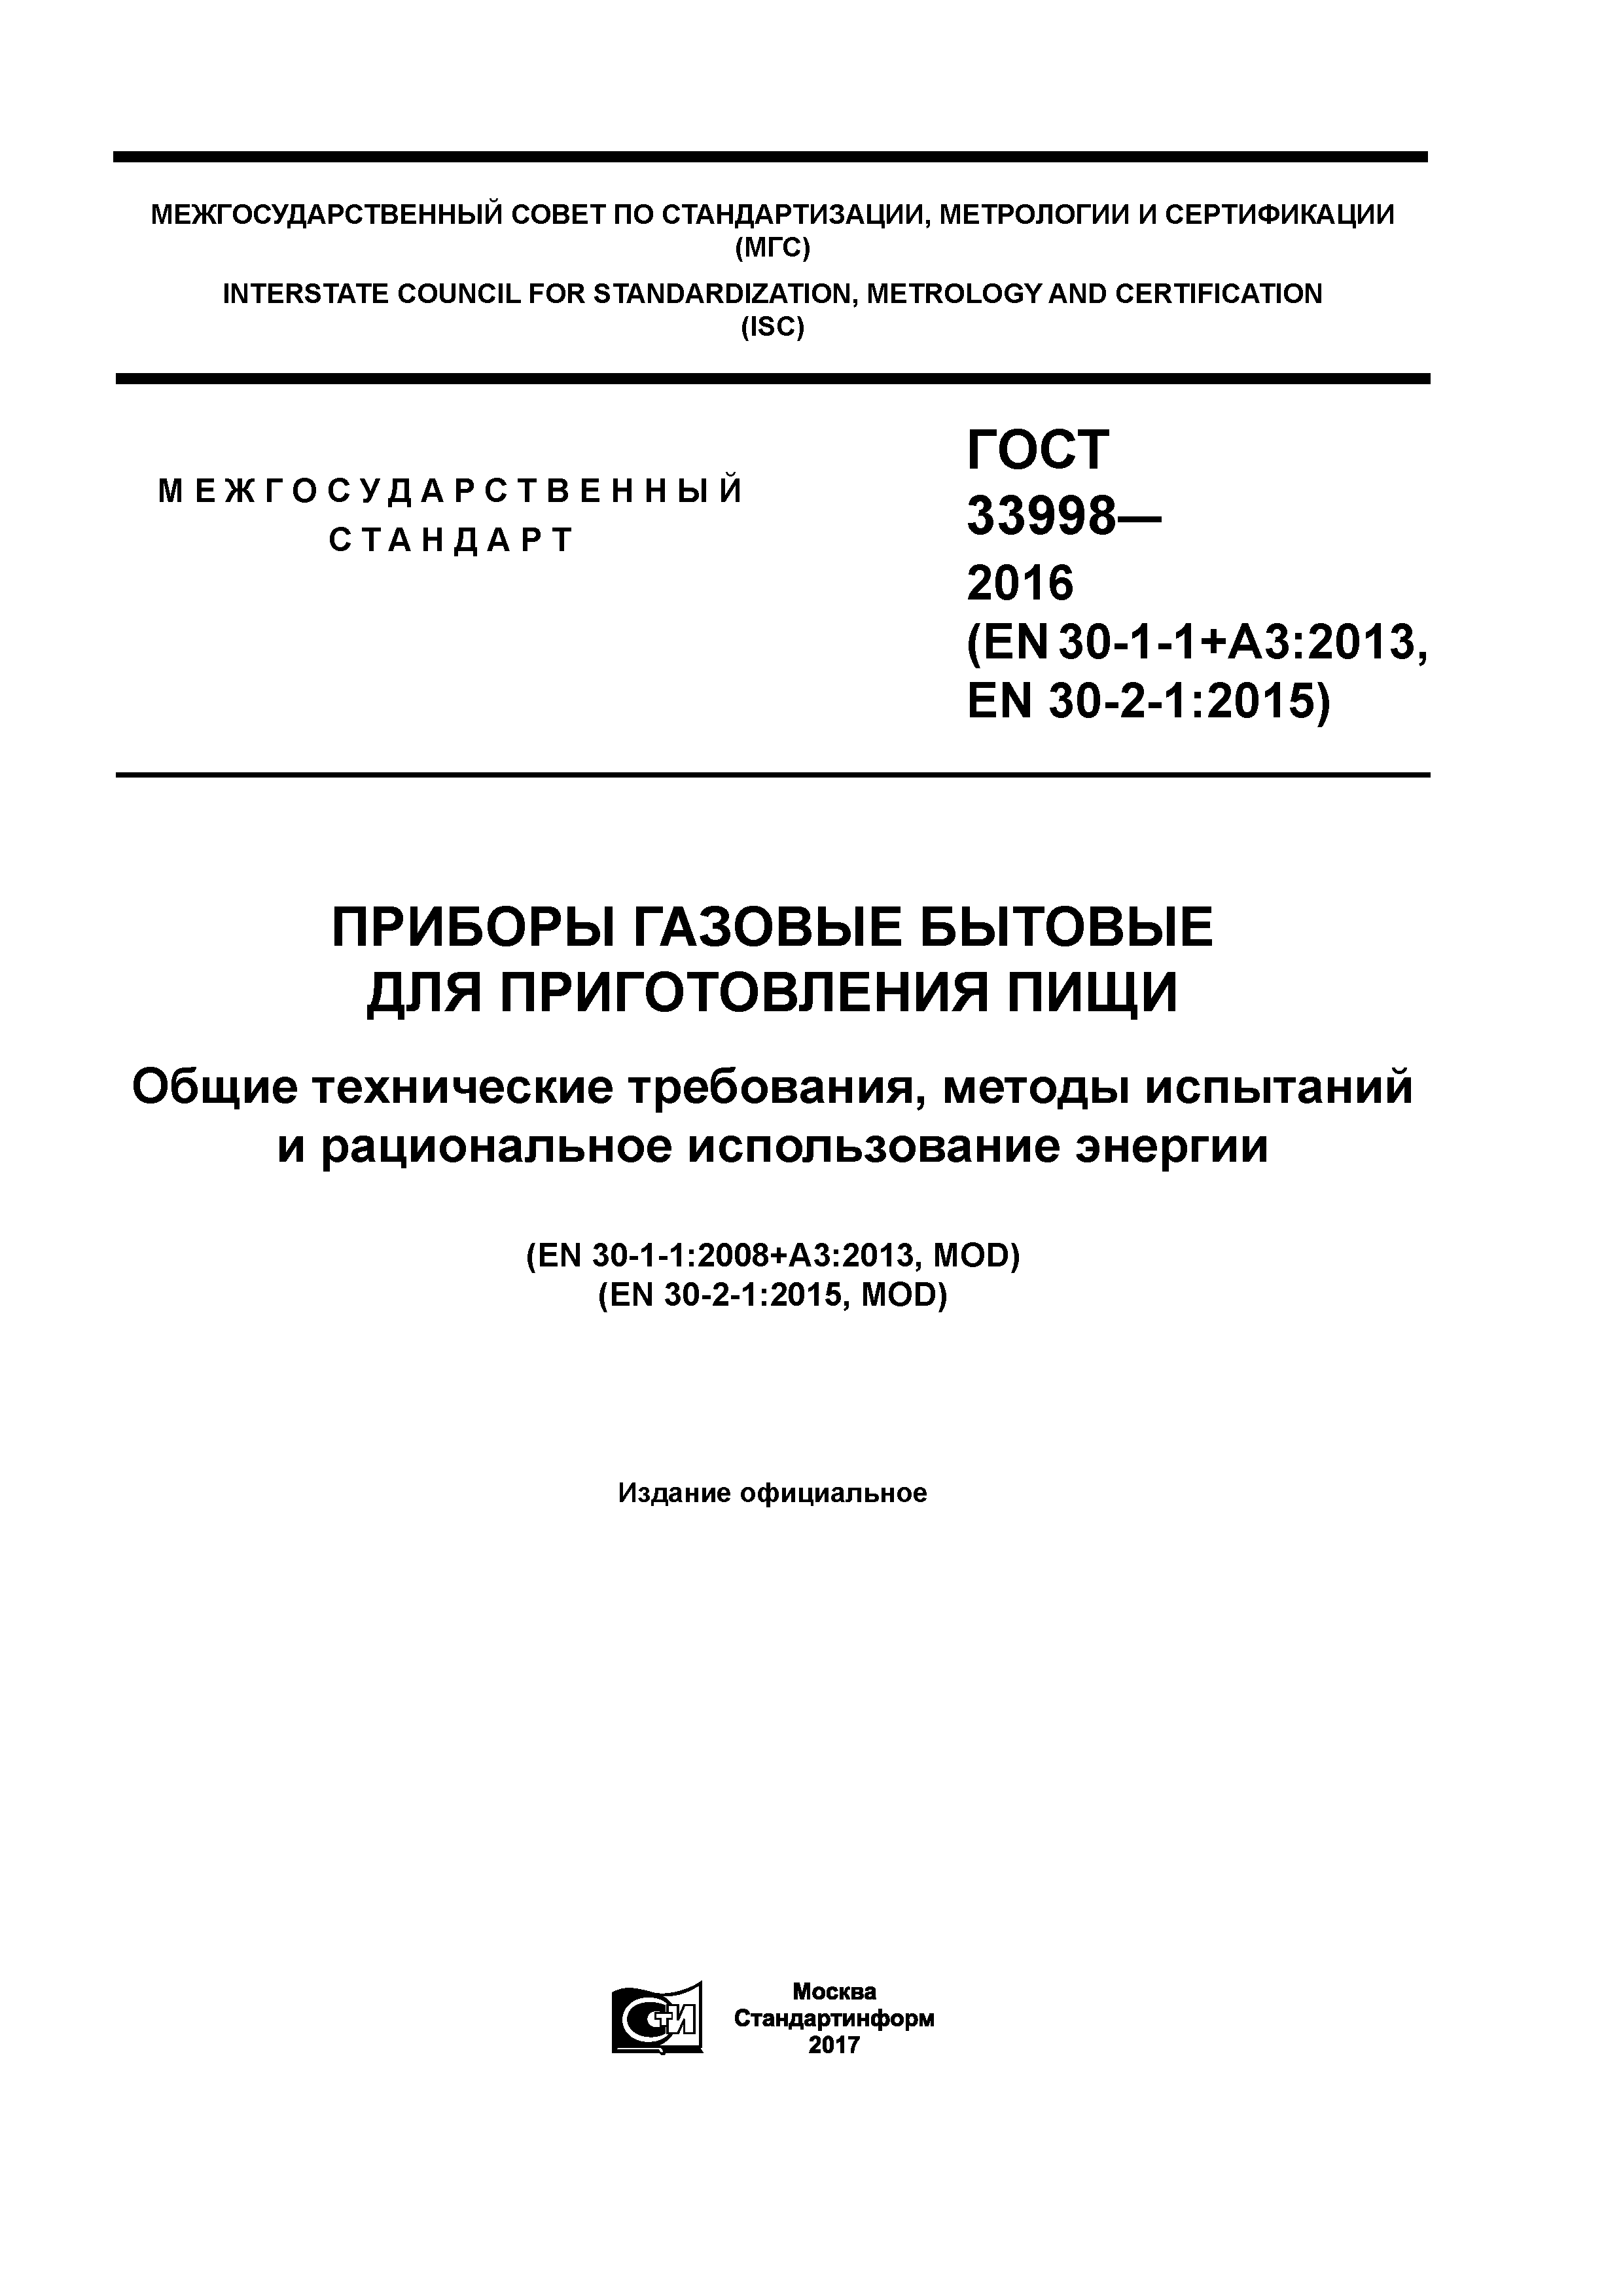 ГОСТ 33998-2016